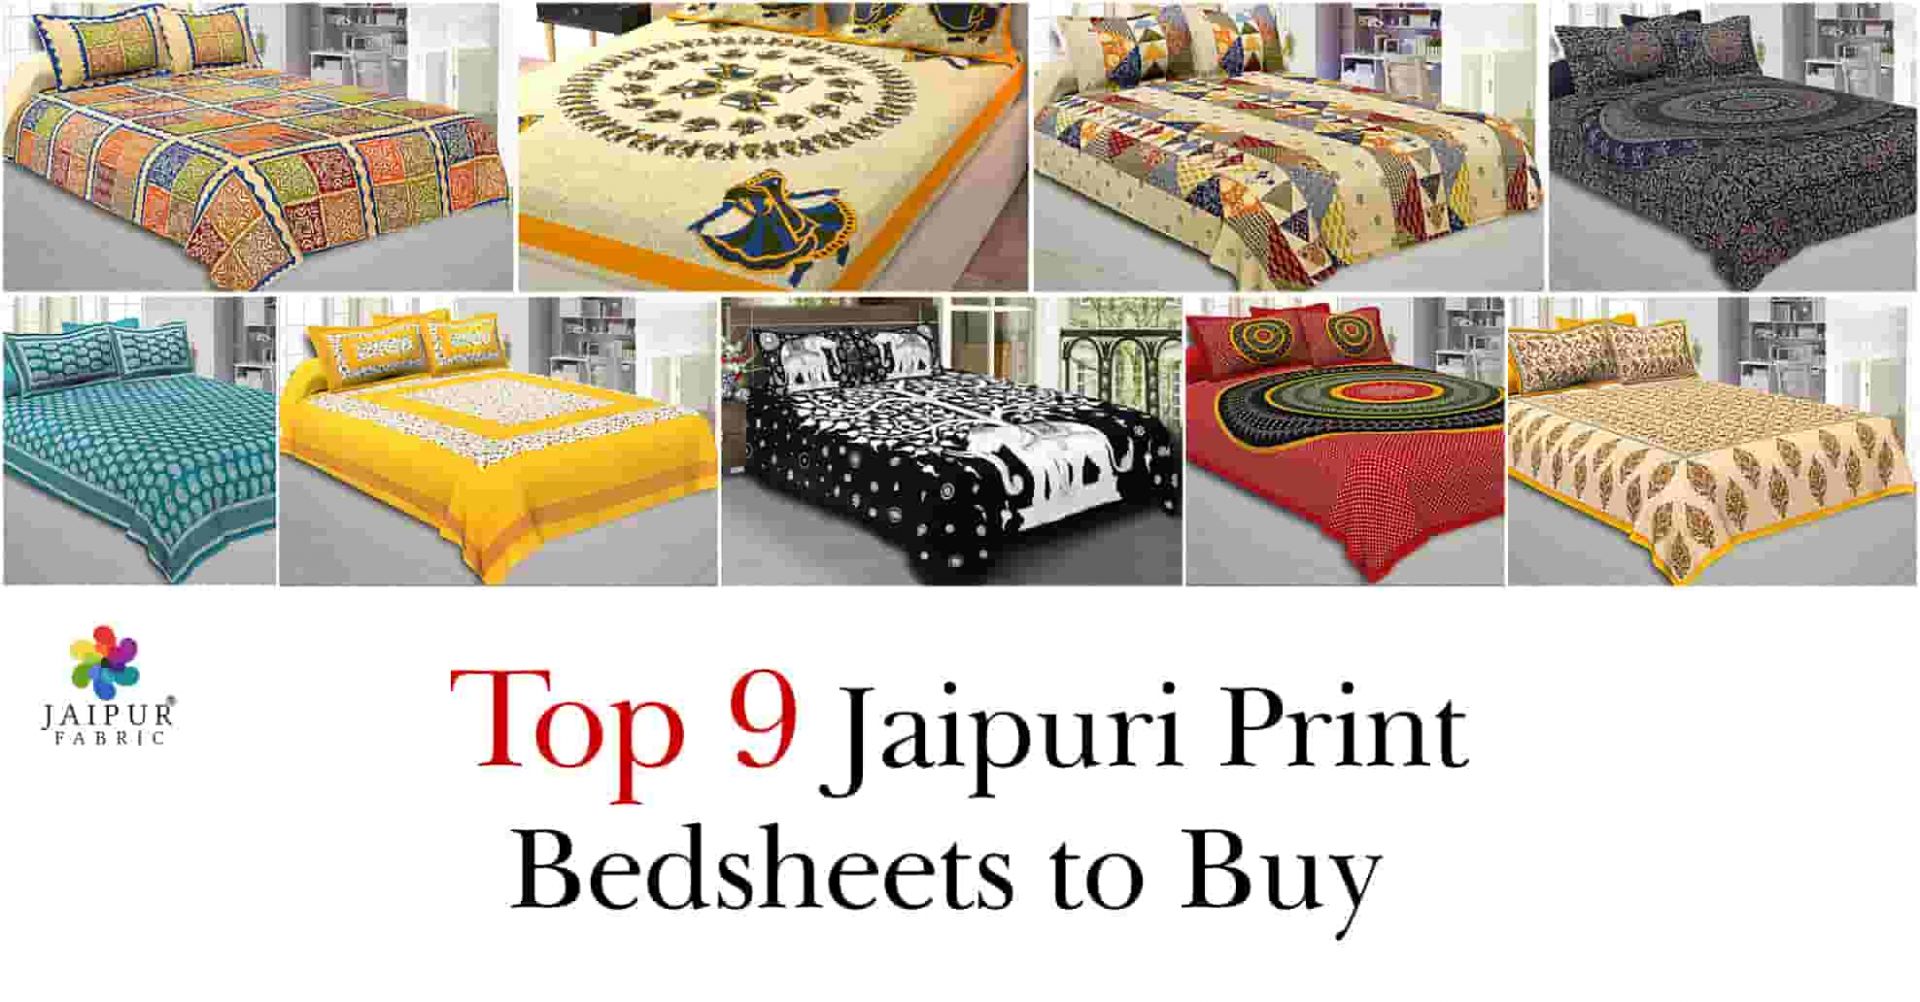 Top 9 Jaipuri Print Bedsheets to Buy